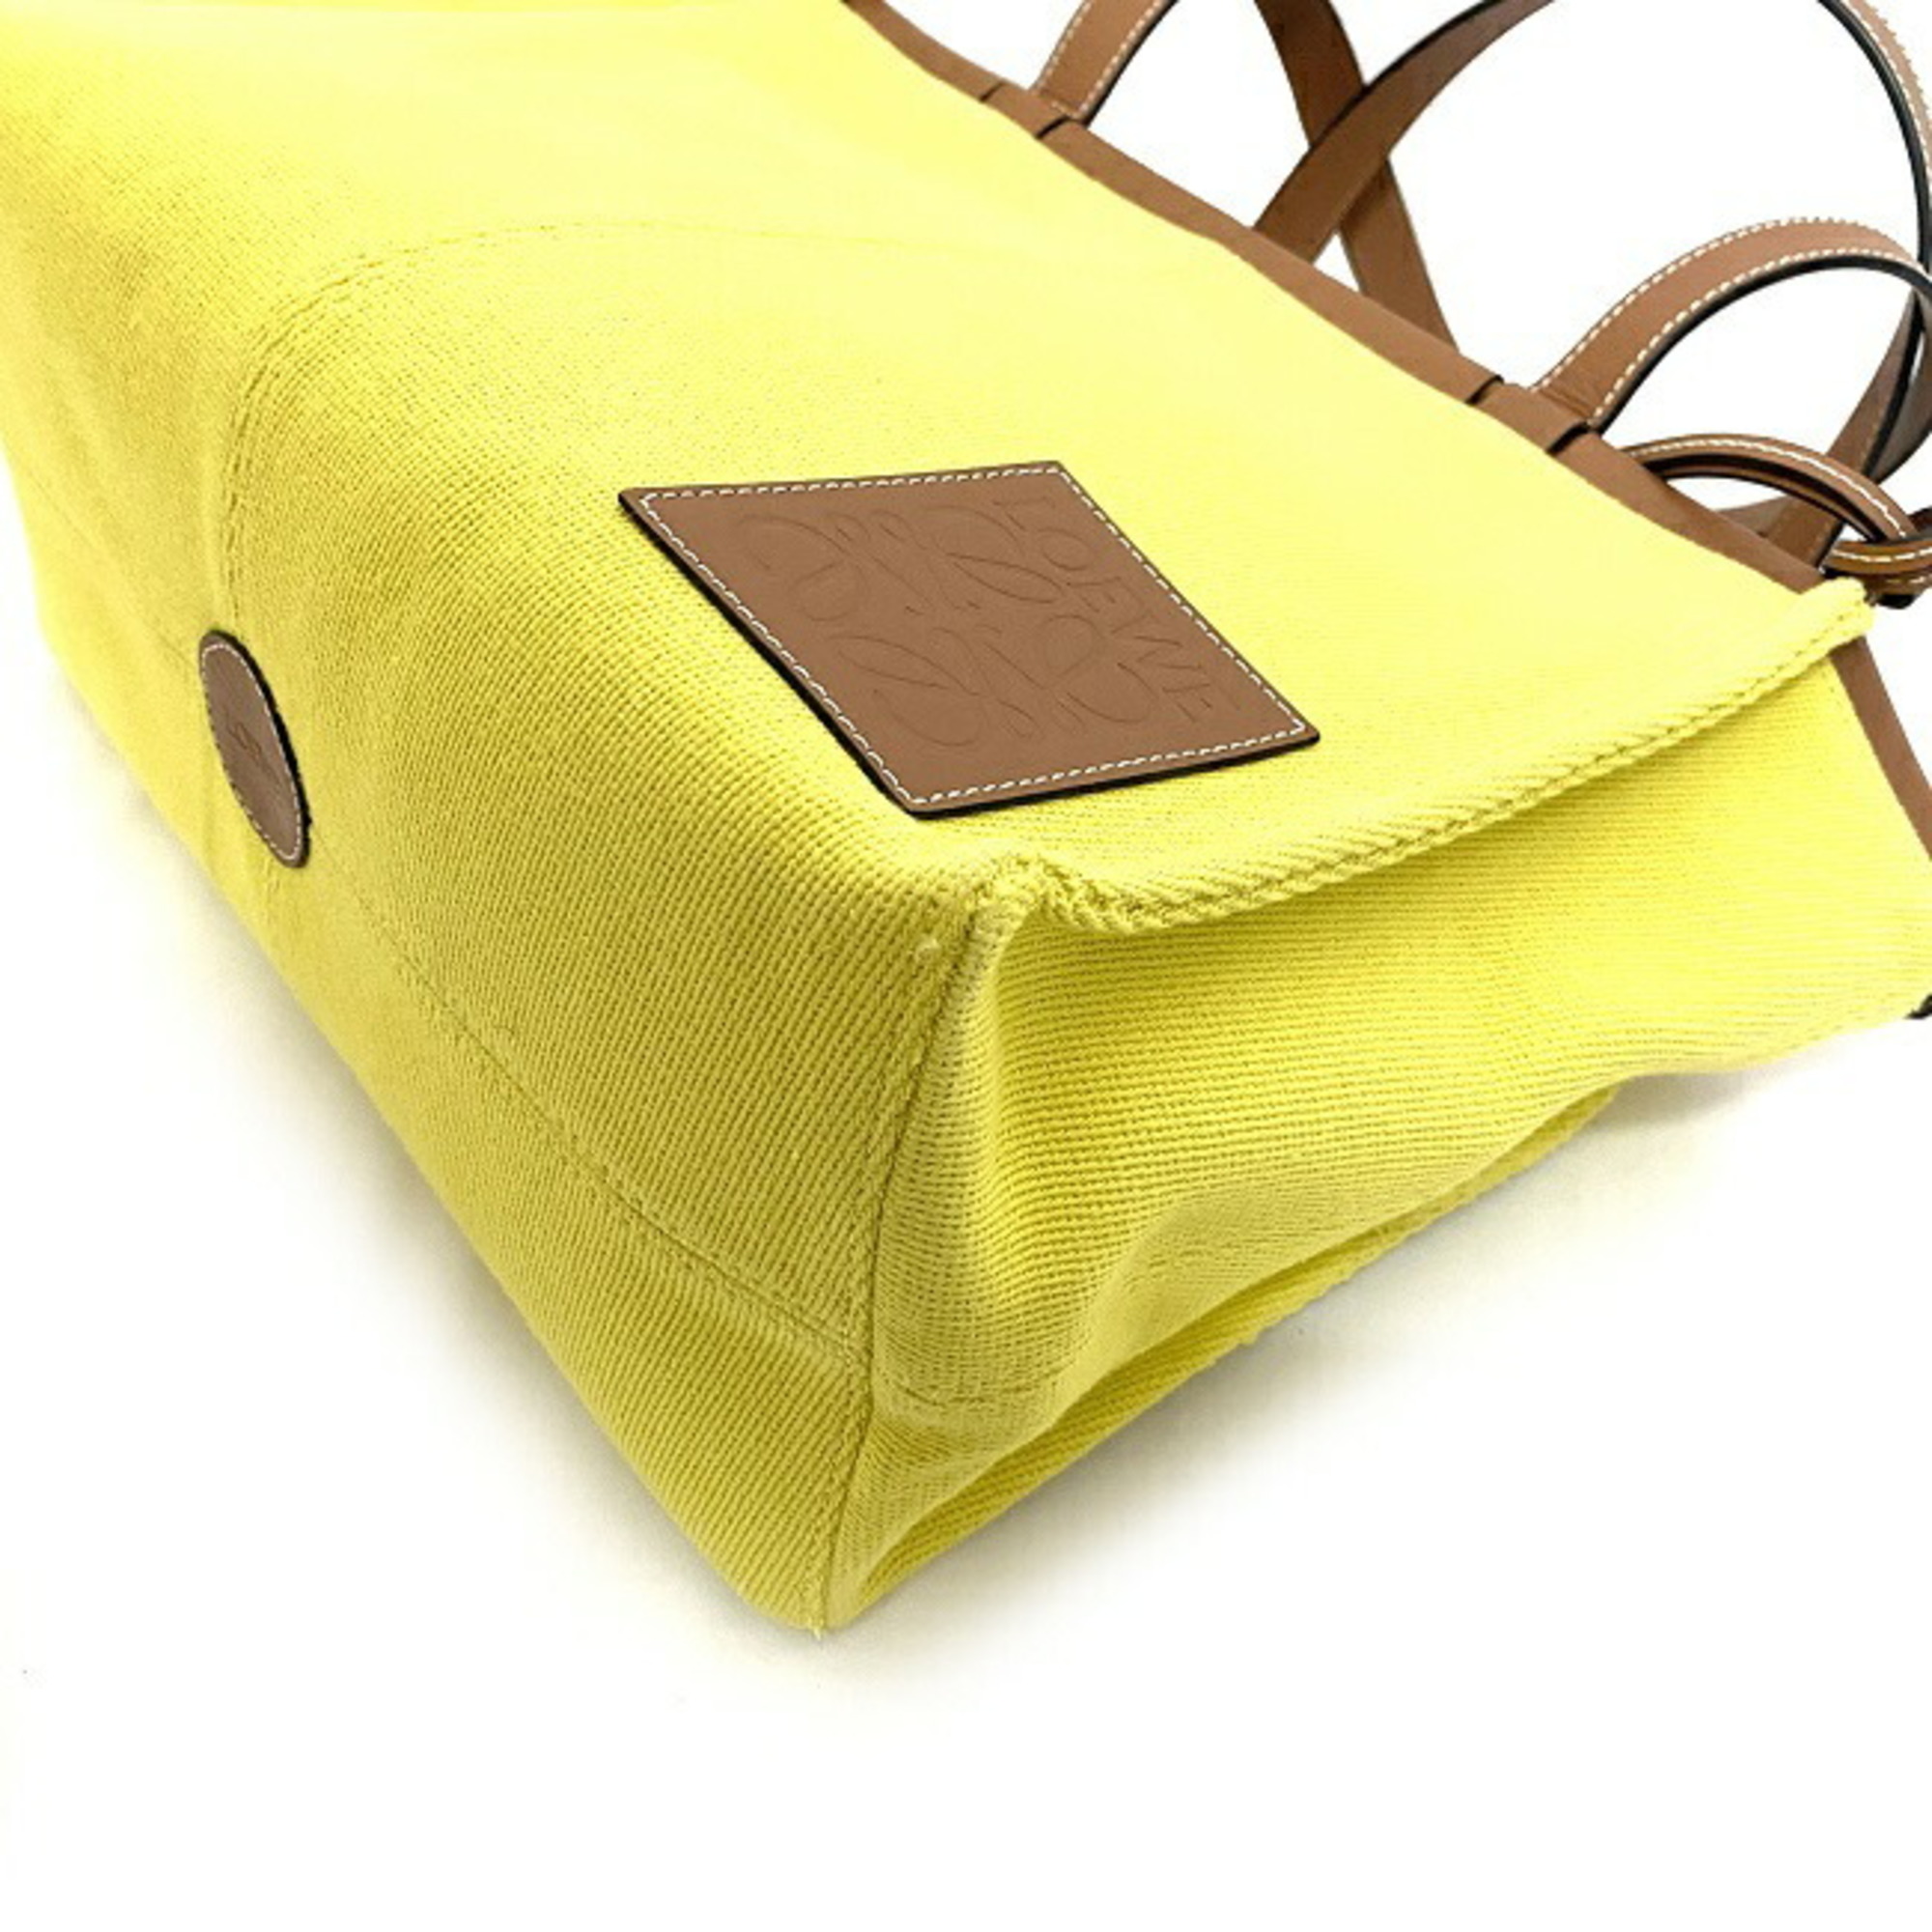 Loewe cushion yellow brown leather patch anagram 330.02AA93 canvas LOEWE tote bag